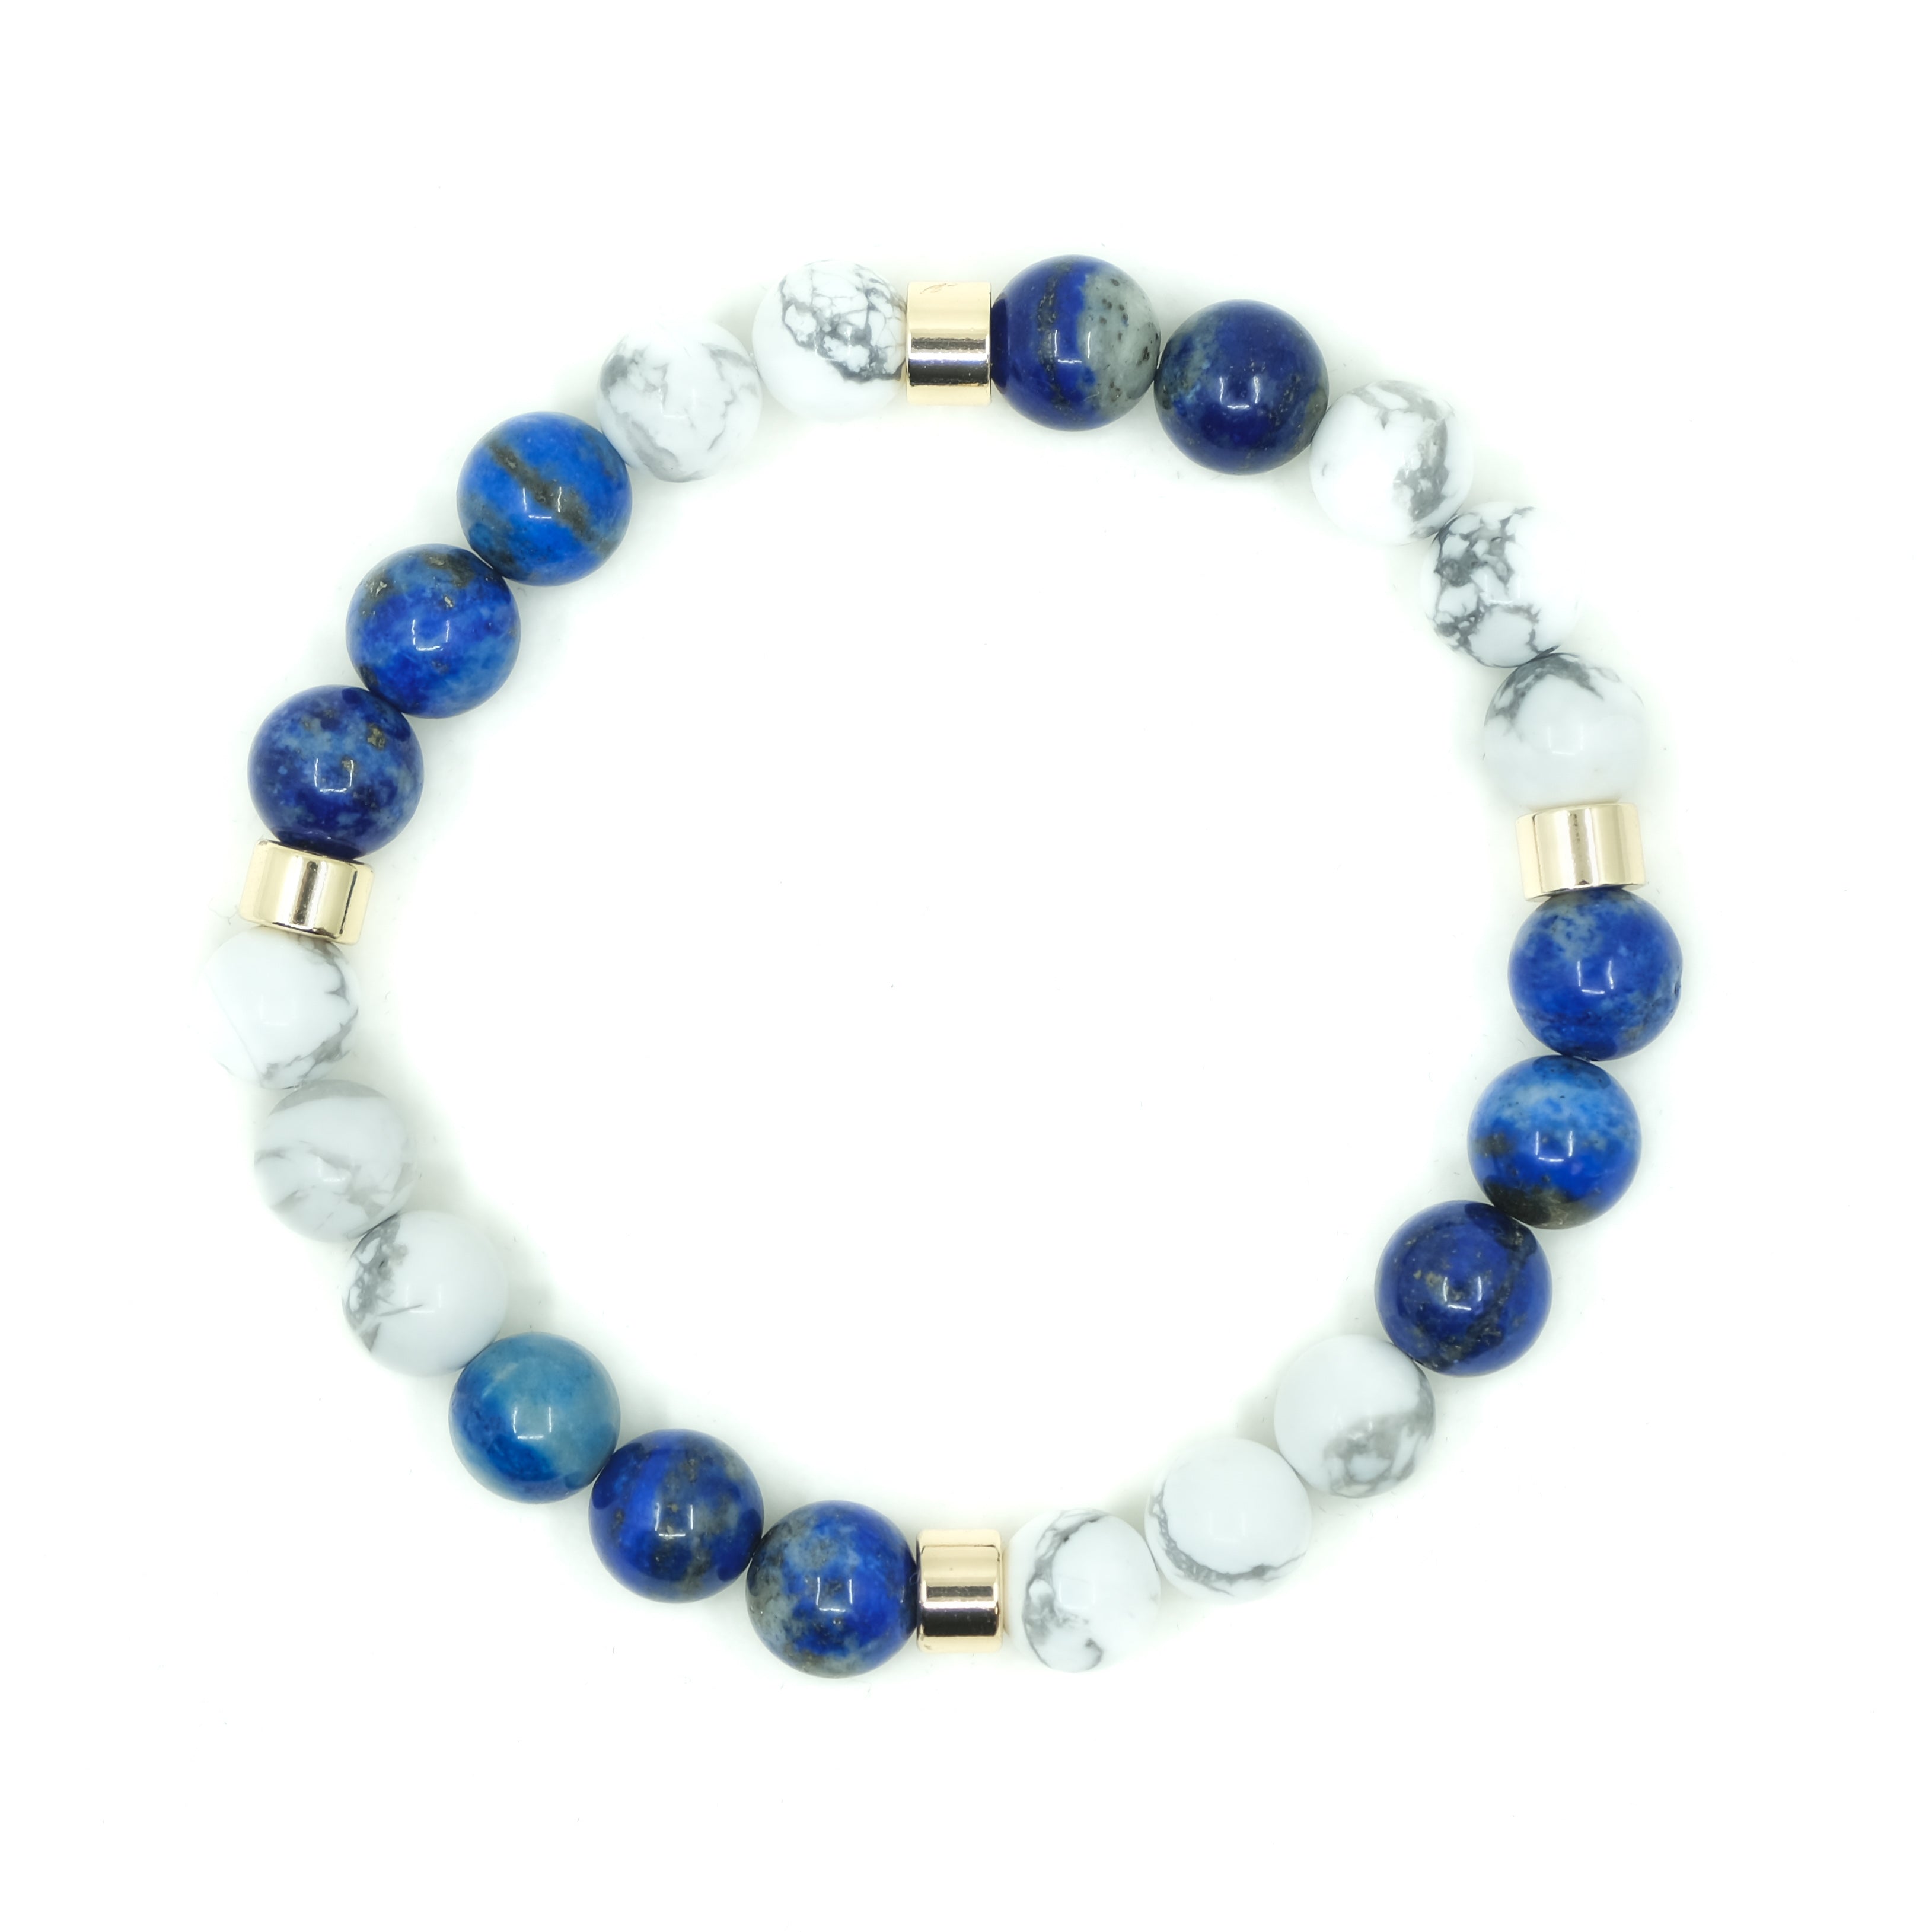 Lapis Lazuli and Howlite Energy Gemstone Bracelet Sample Sale